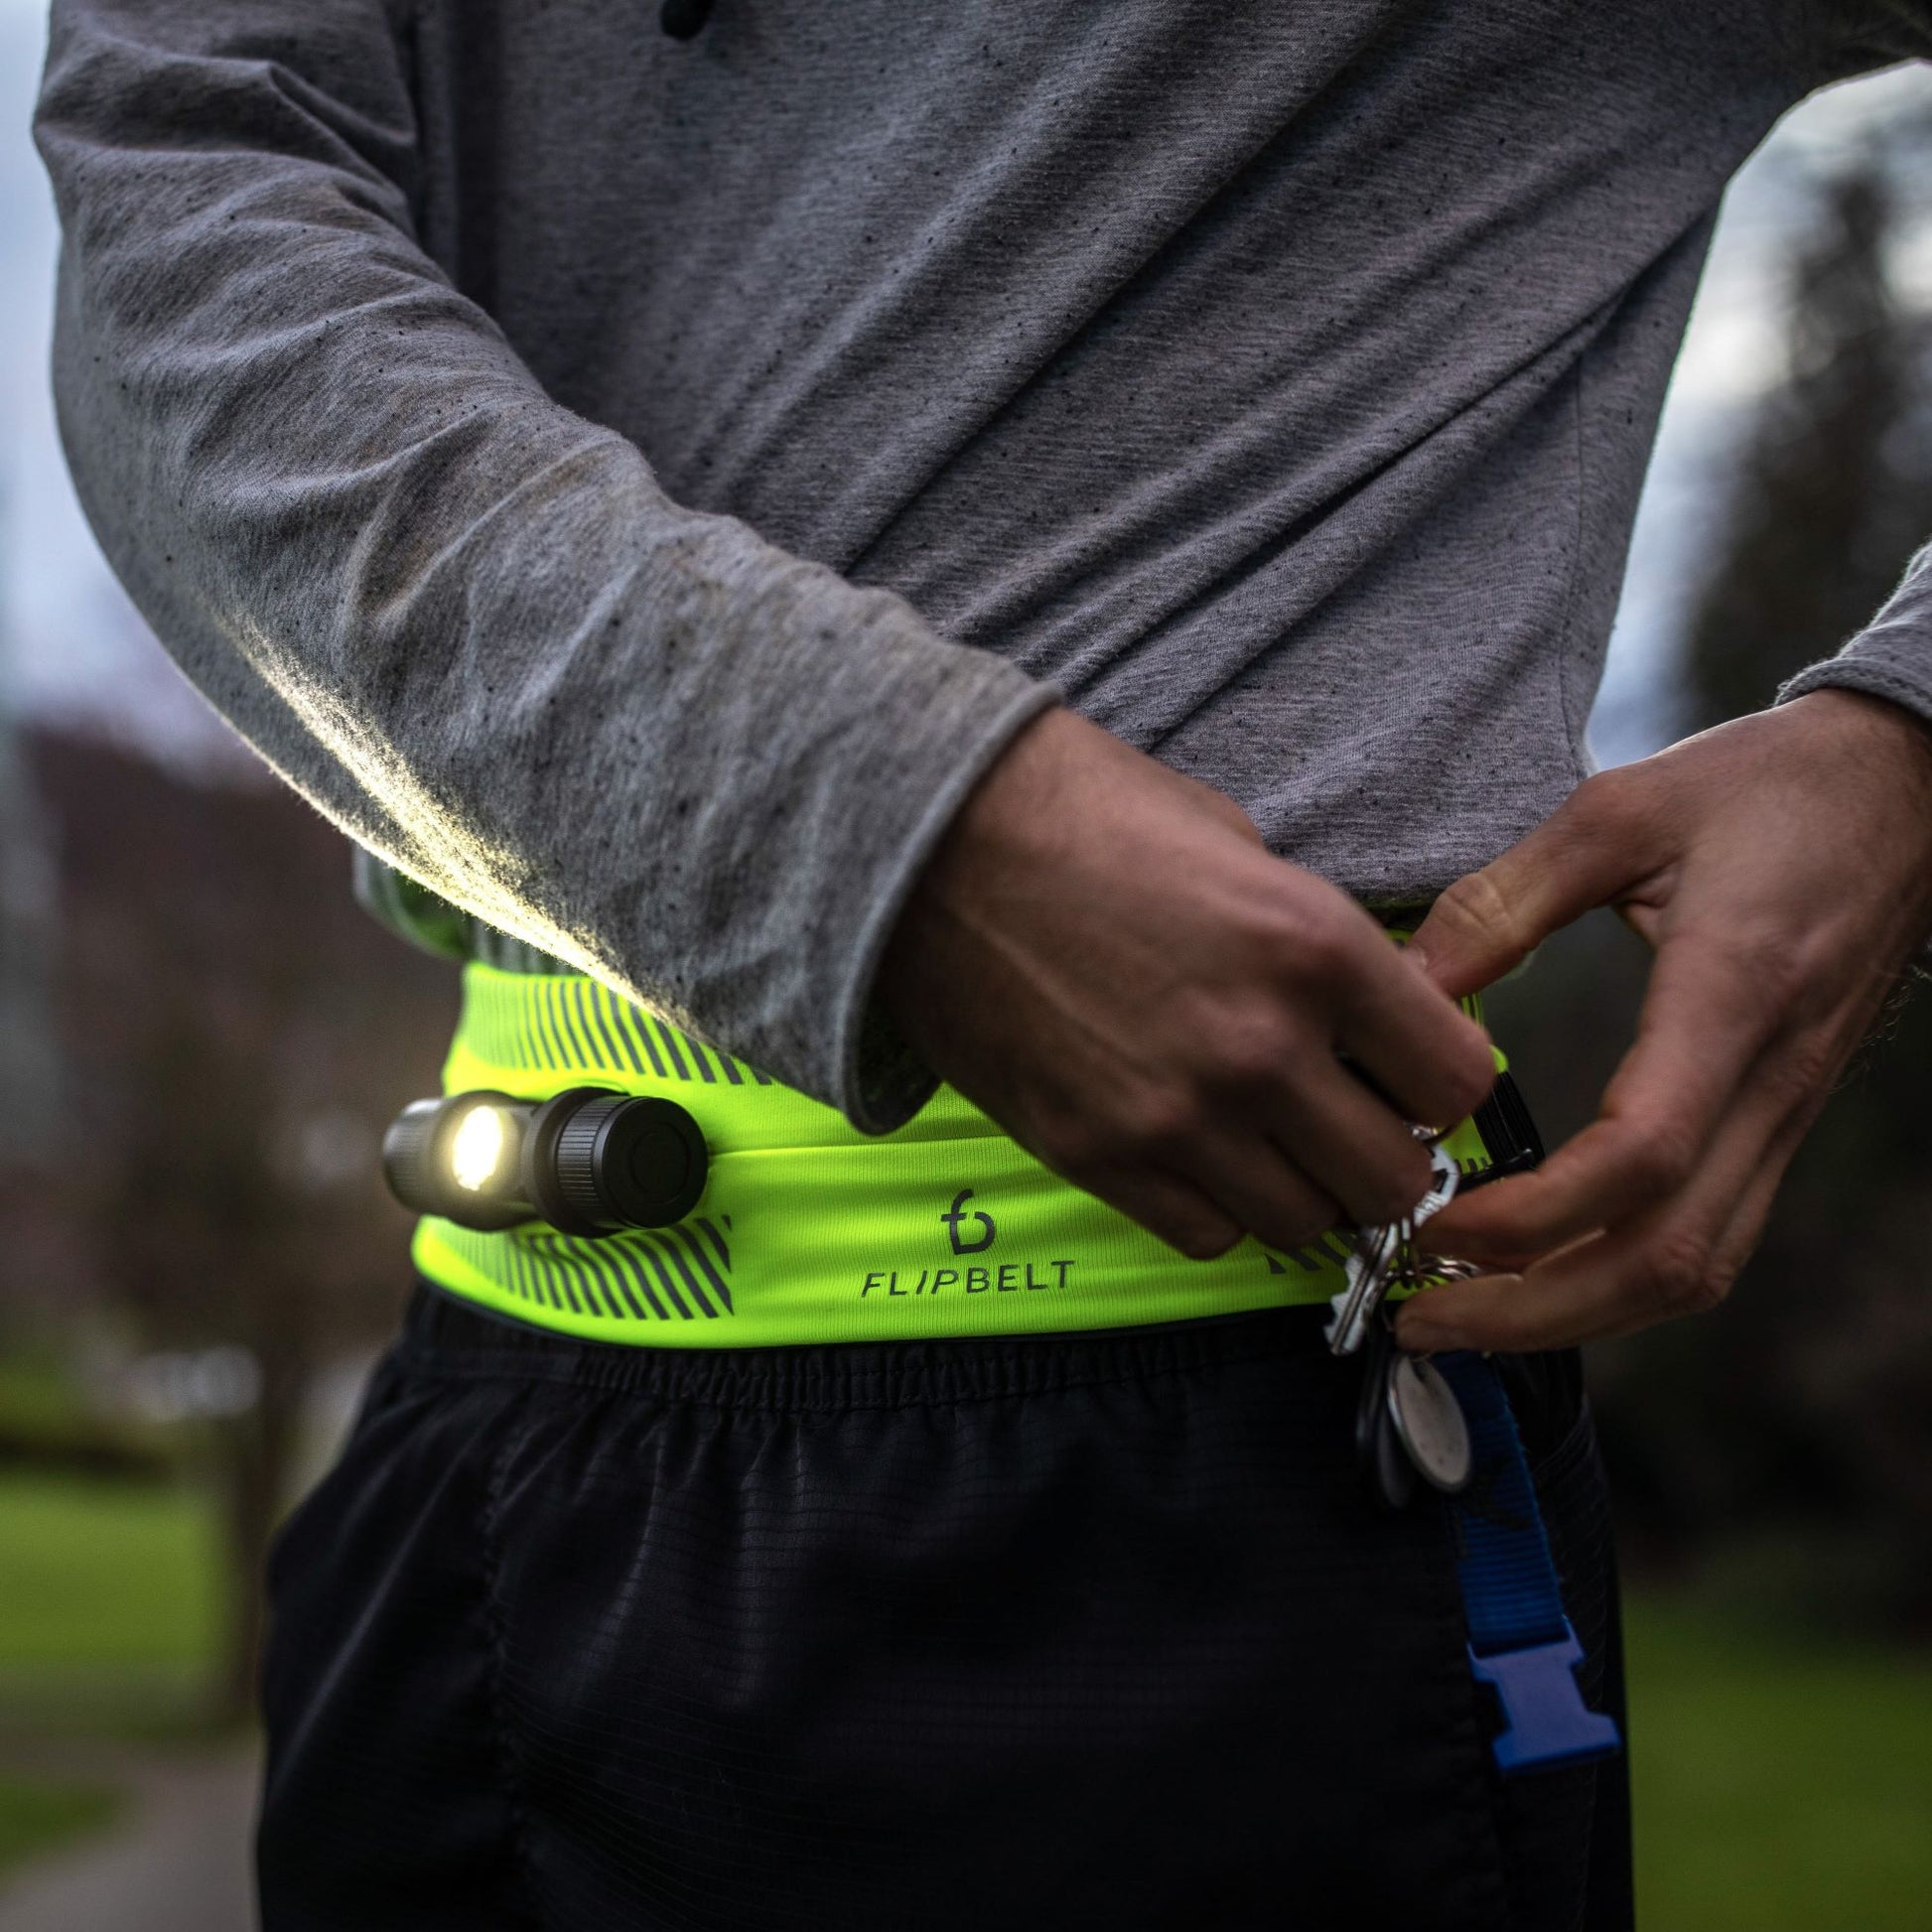 MYCARBON Fanny Pack Waist Pack with Water Bottle Holder Running Belt for  Men Women Walking Hiking Runners Hydration Belt